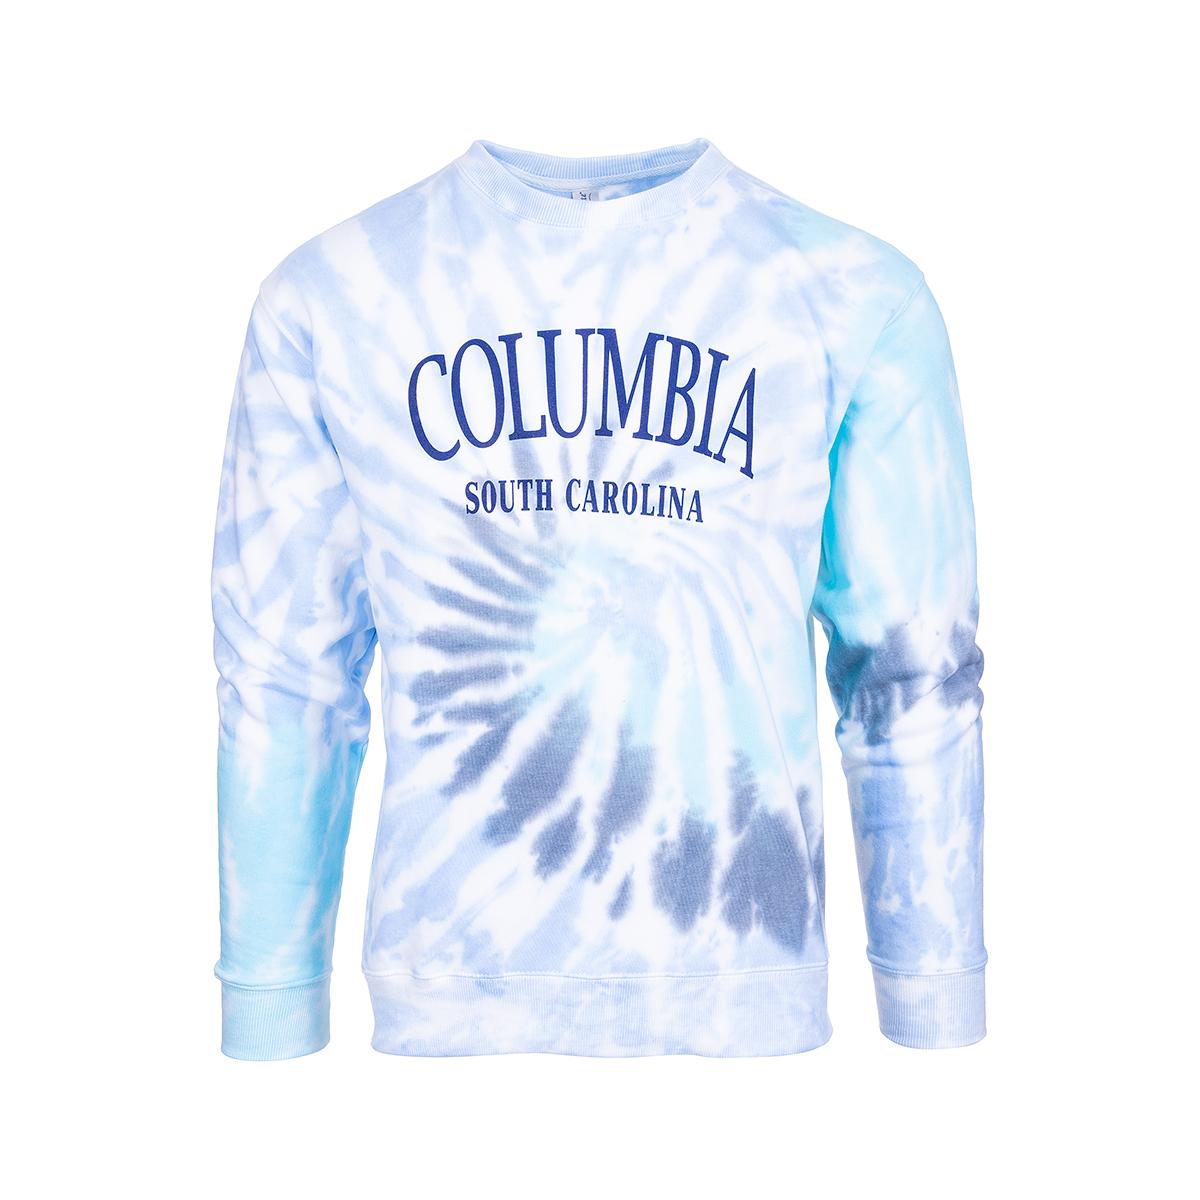  Columbia Tie Dye Crew Neck Knit Sweatshirt